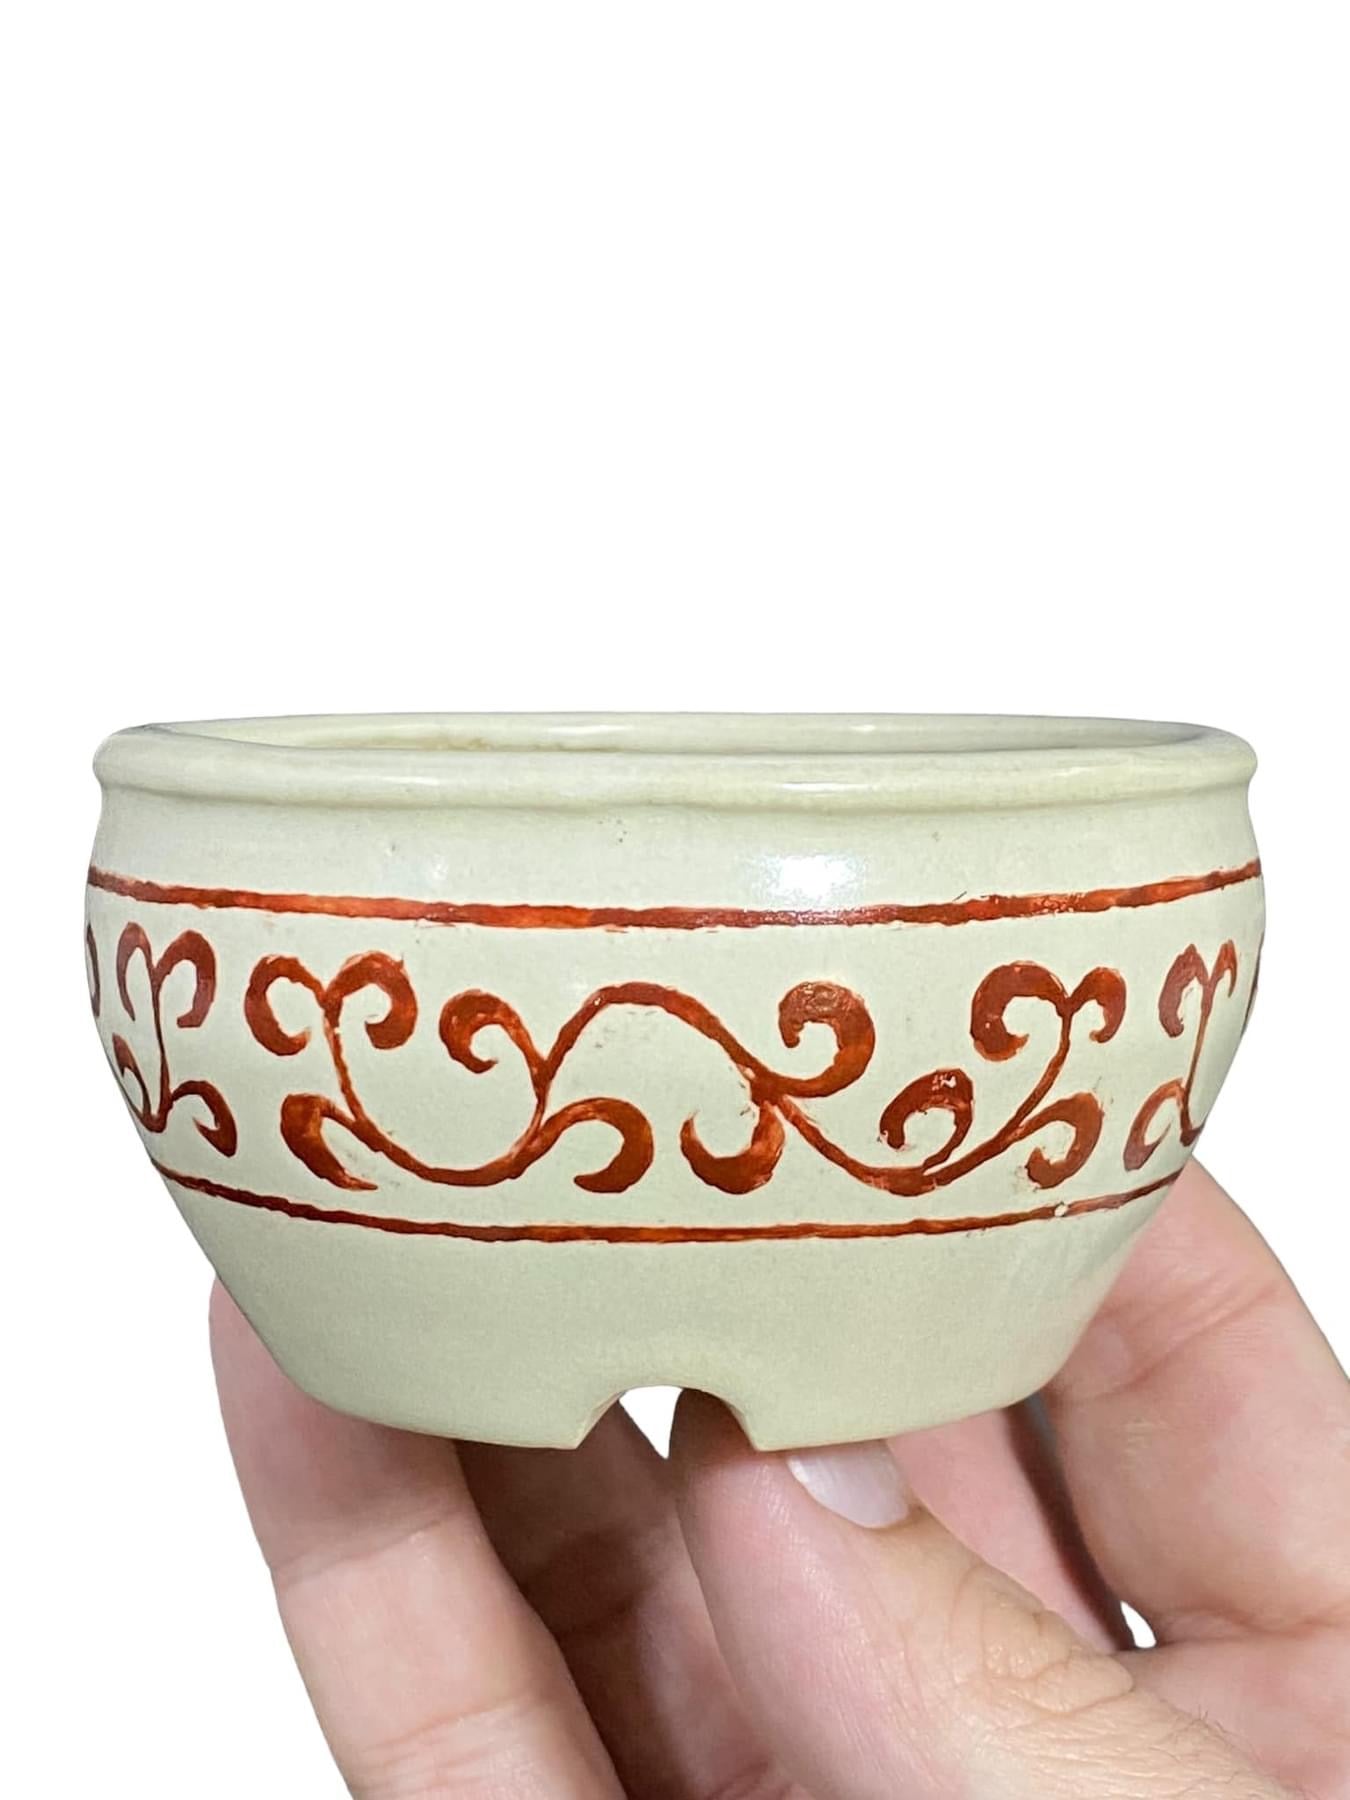 Ikegami - Painted Bowl Bonsai Pot